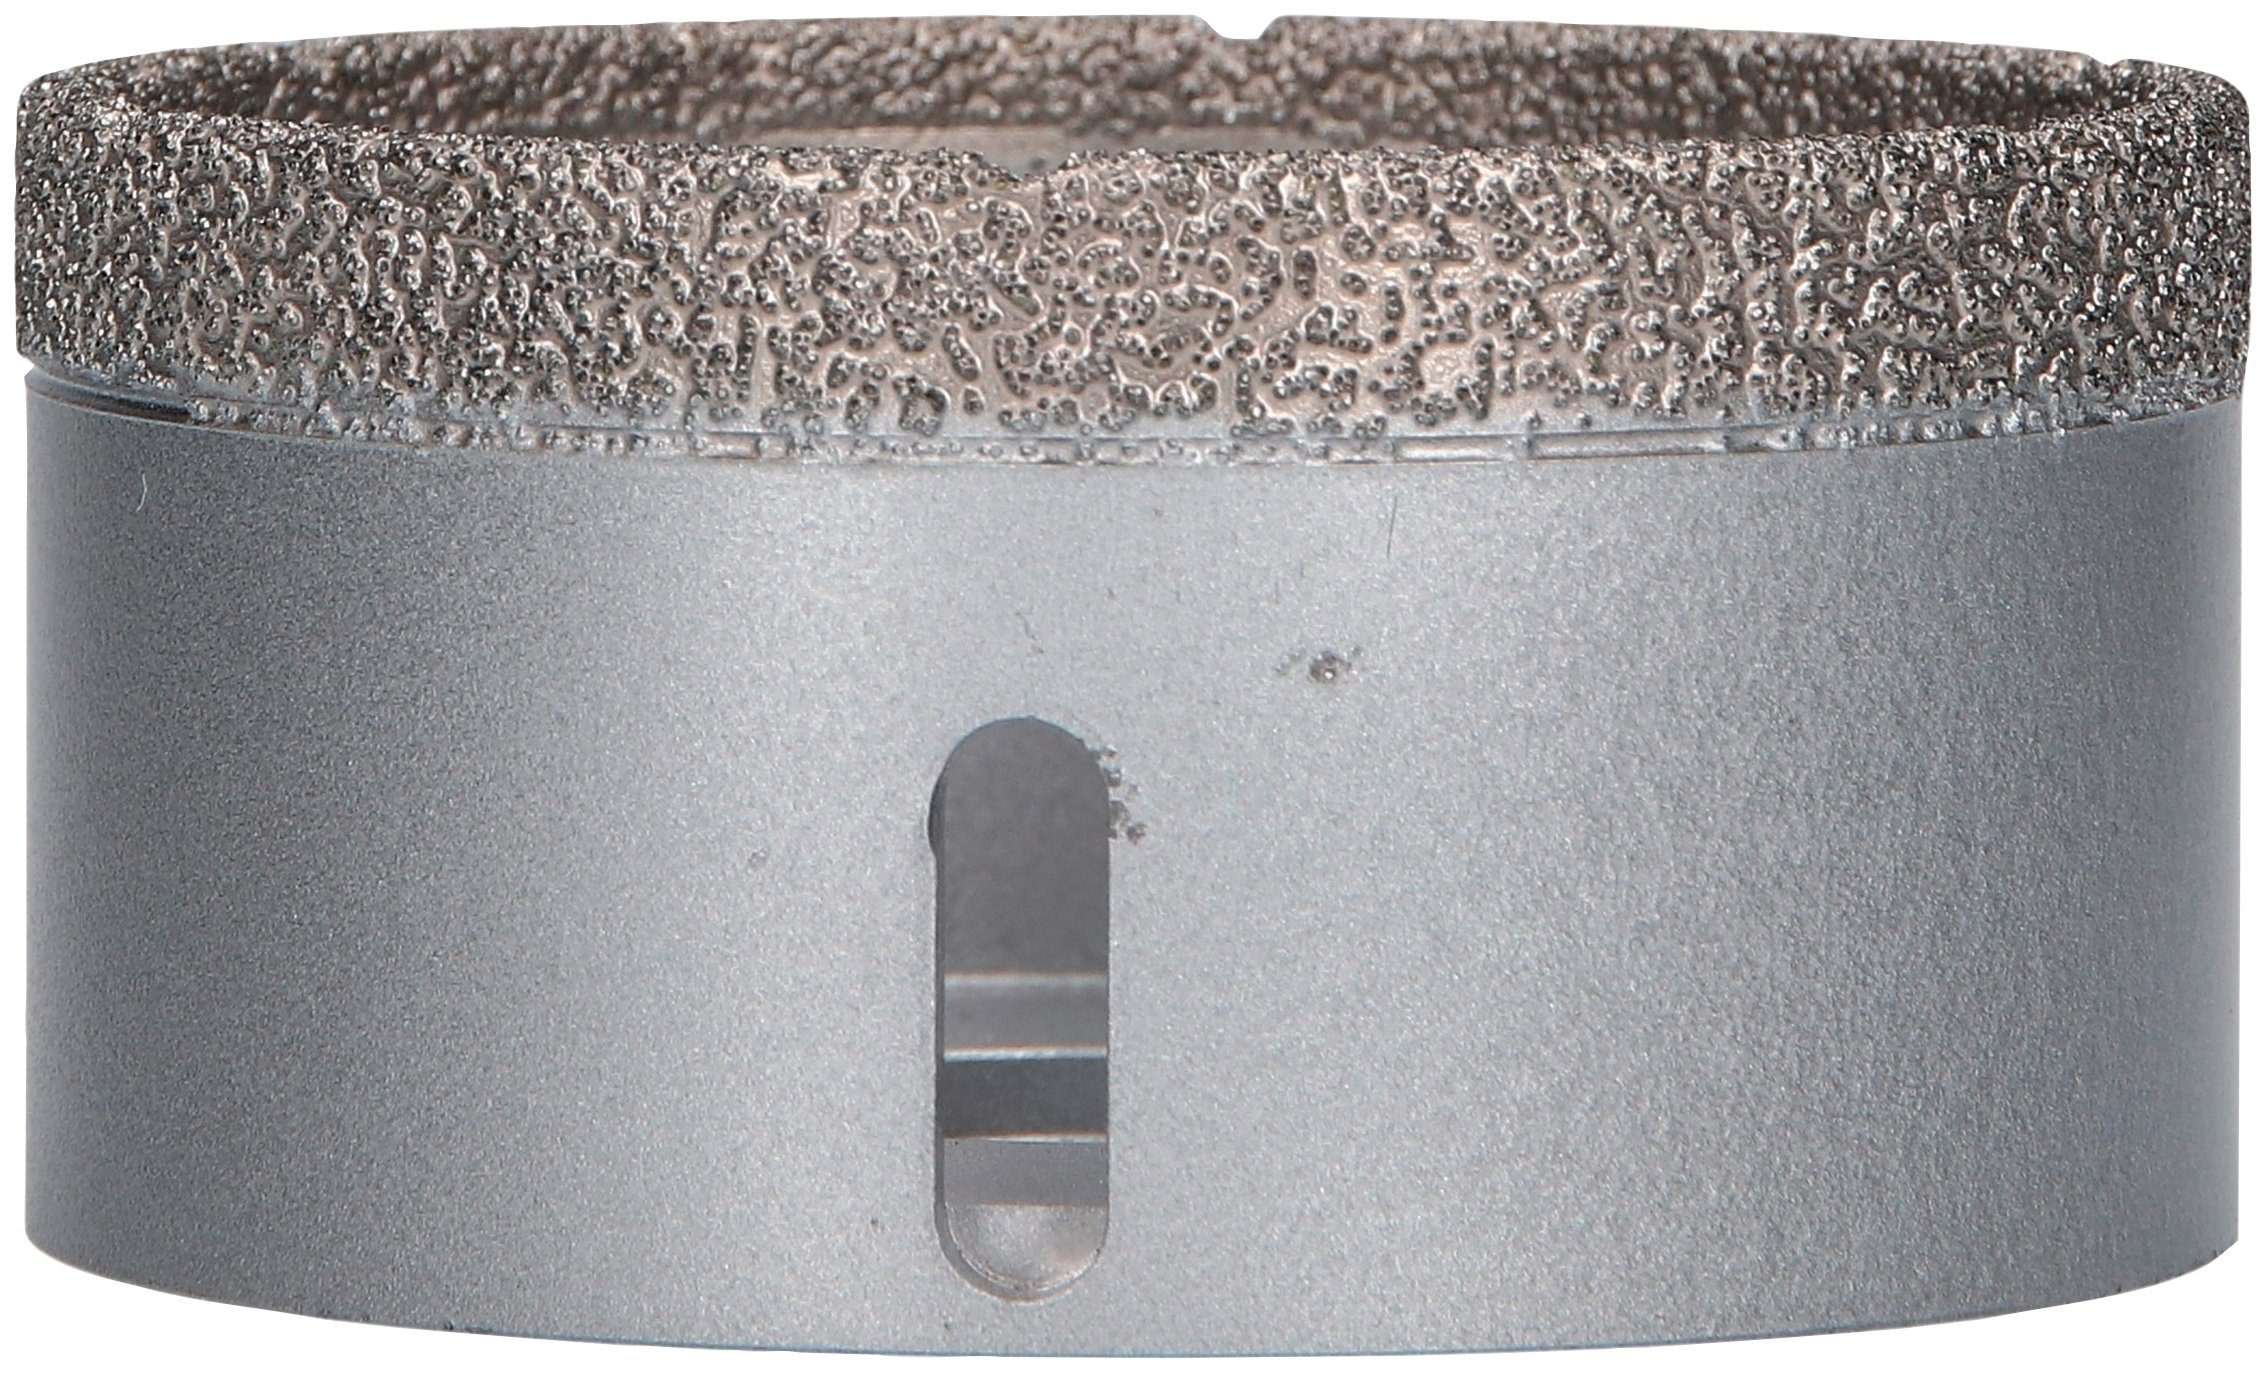 Diamanttrockenbohrer Ceramic Professional Best Bosch 35 80 mm, x 80 X-LOCK for Speed, mm Ø Dry